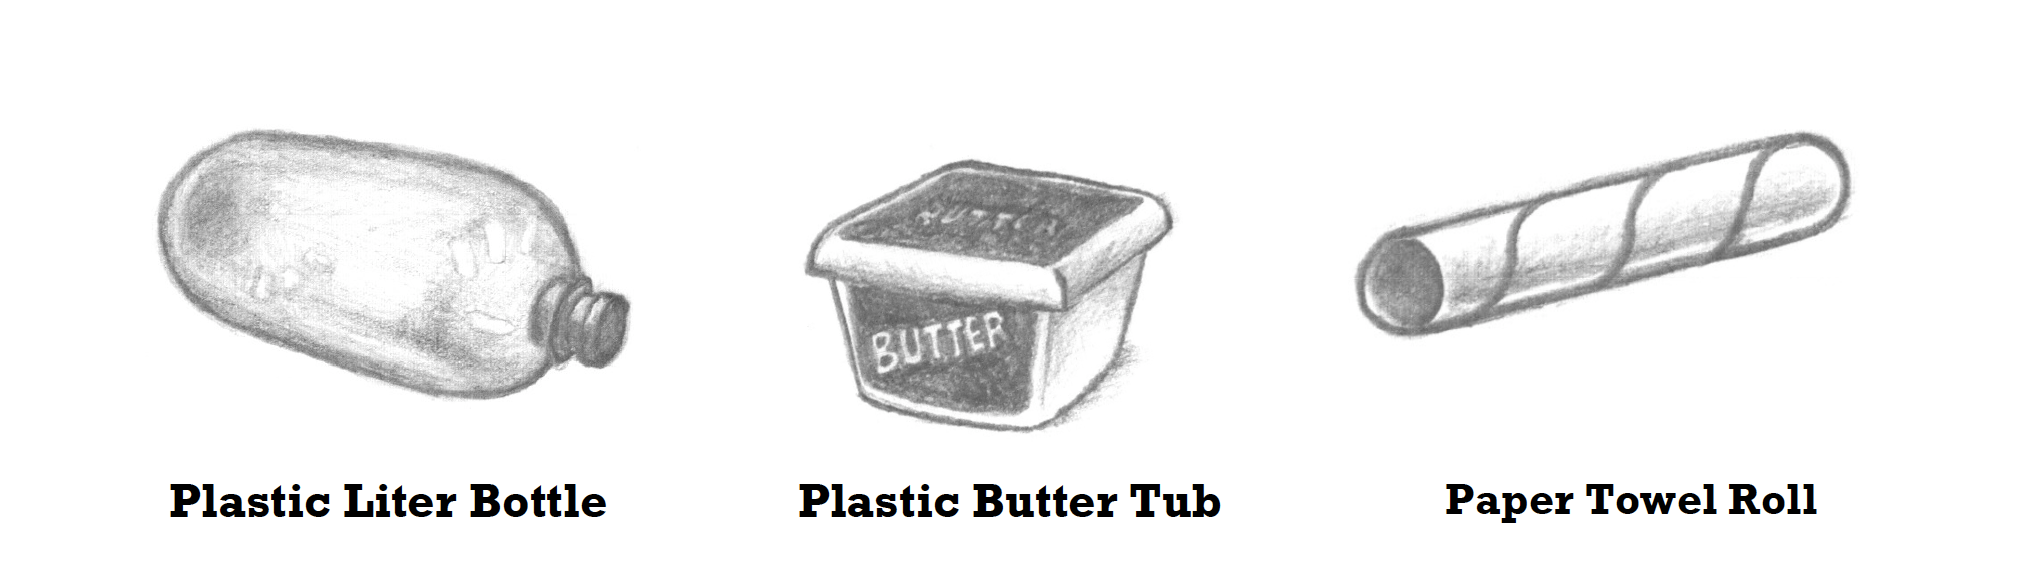 Plastic Liter Bottle, Plastic Butter Tub, Paper Towel Roll